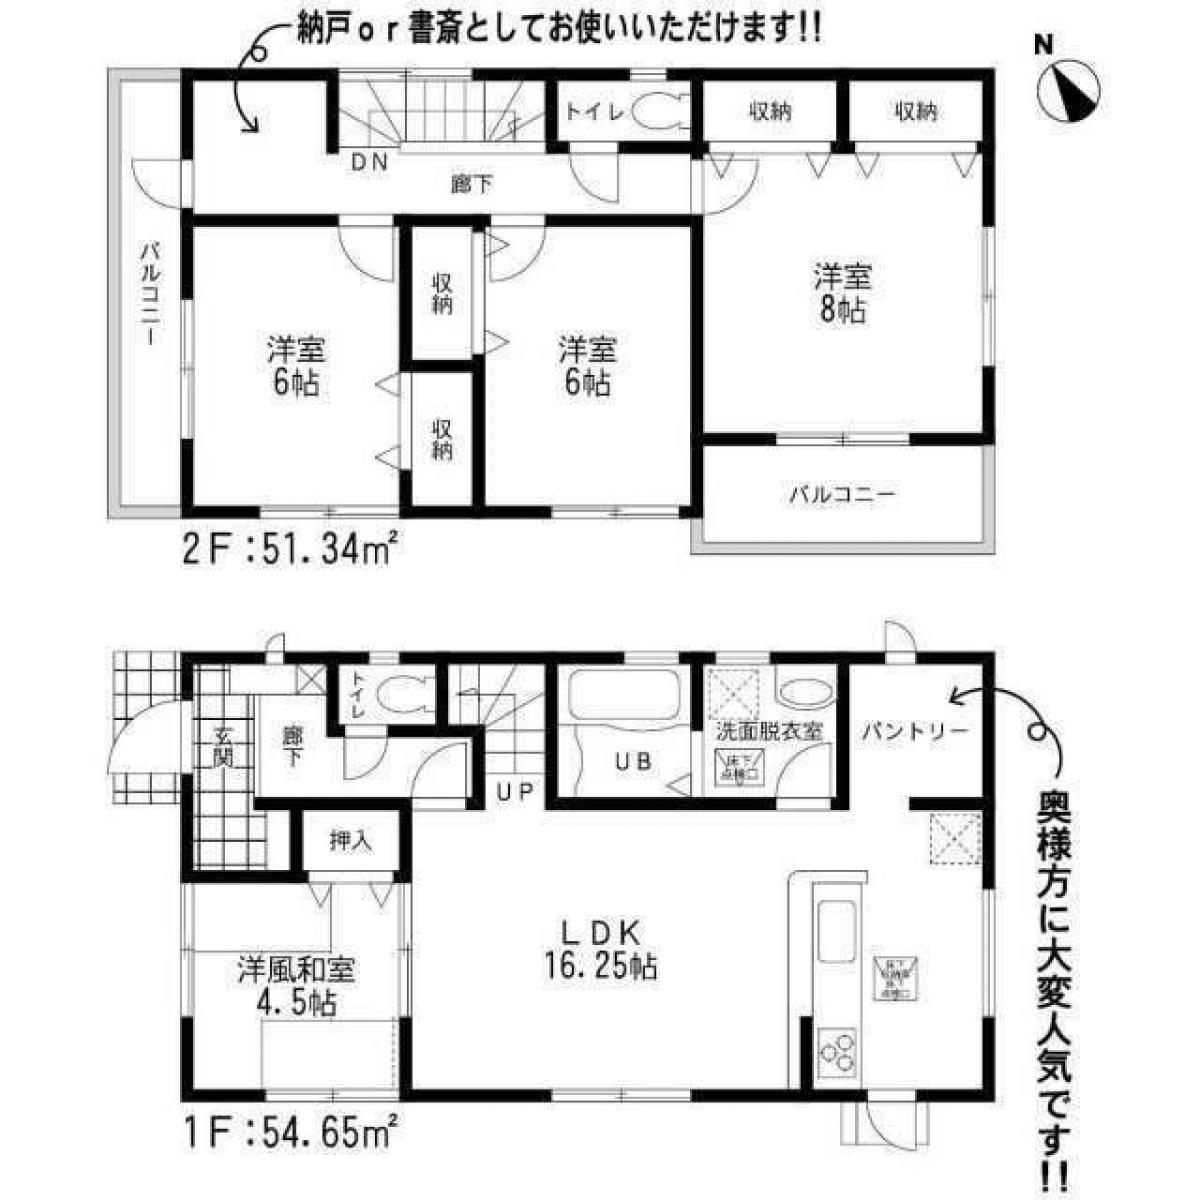 Picture of Home For Sale in Dazaifu Shi, Fukuoka, Japan